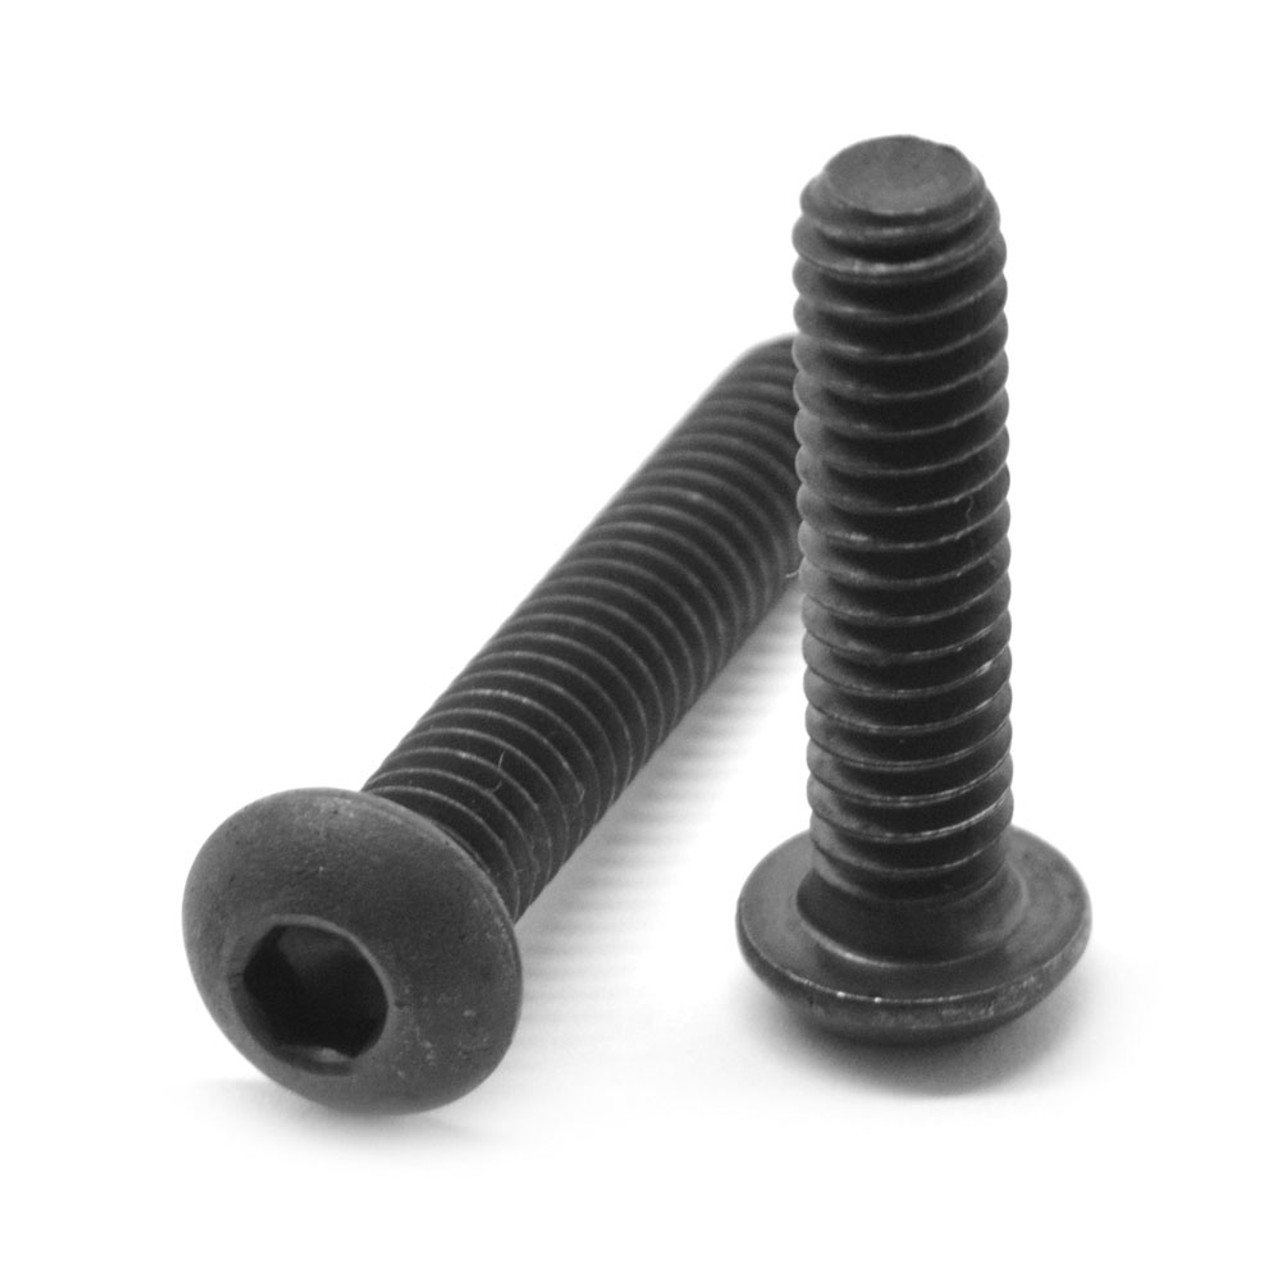 M12 x 1.75 x 50 MM (FT) Coarse Thread ISO 7380 Class 10.9 Socket Button Head Cap Screw Alloy Steel Black Oxide